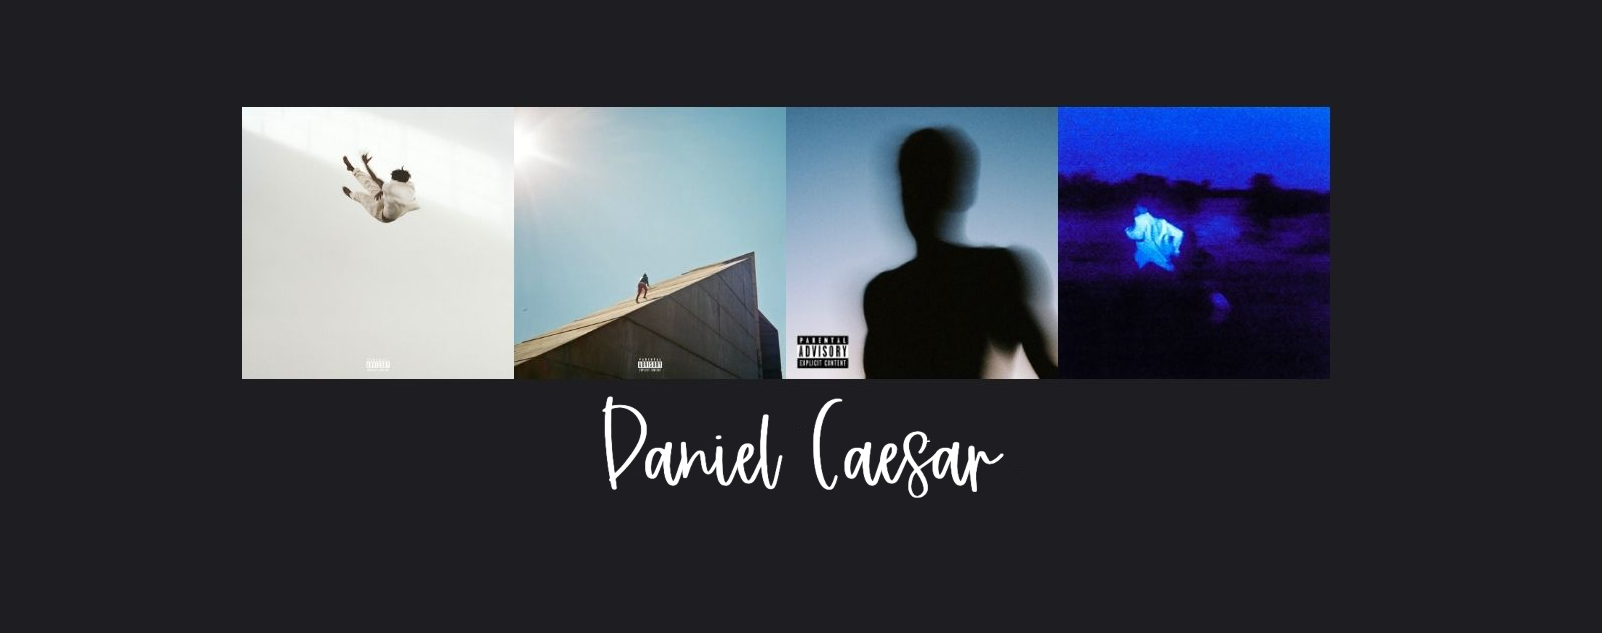 Daniel Caesar – Please Do Not Lean Lyrics